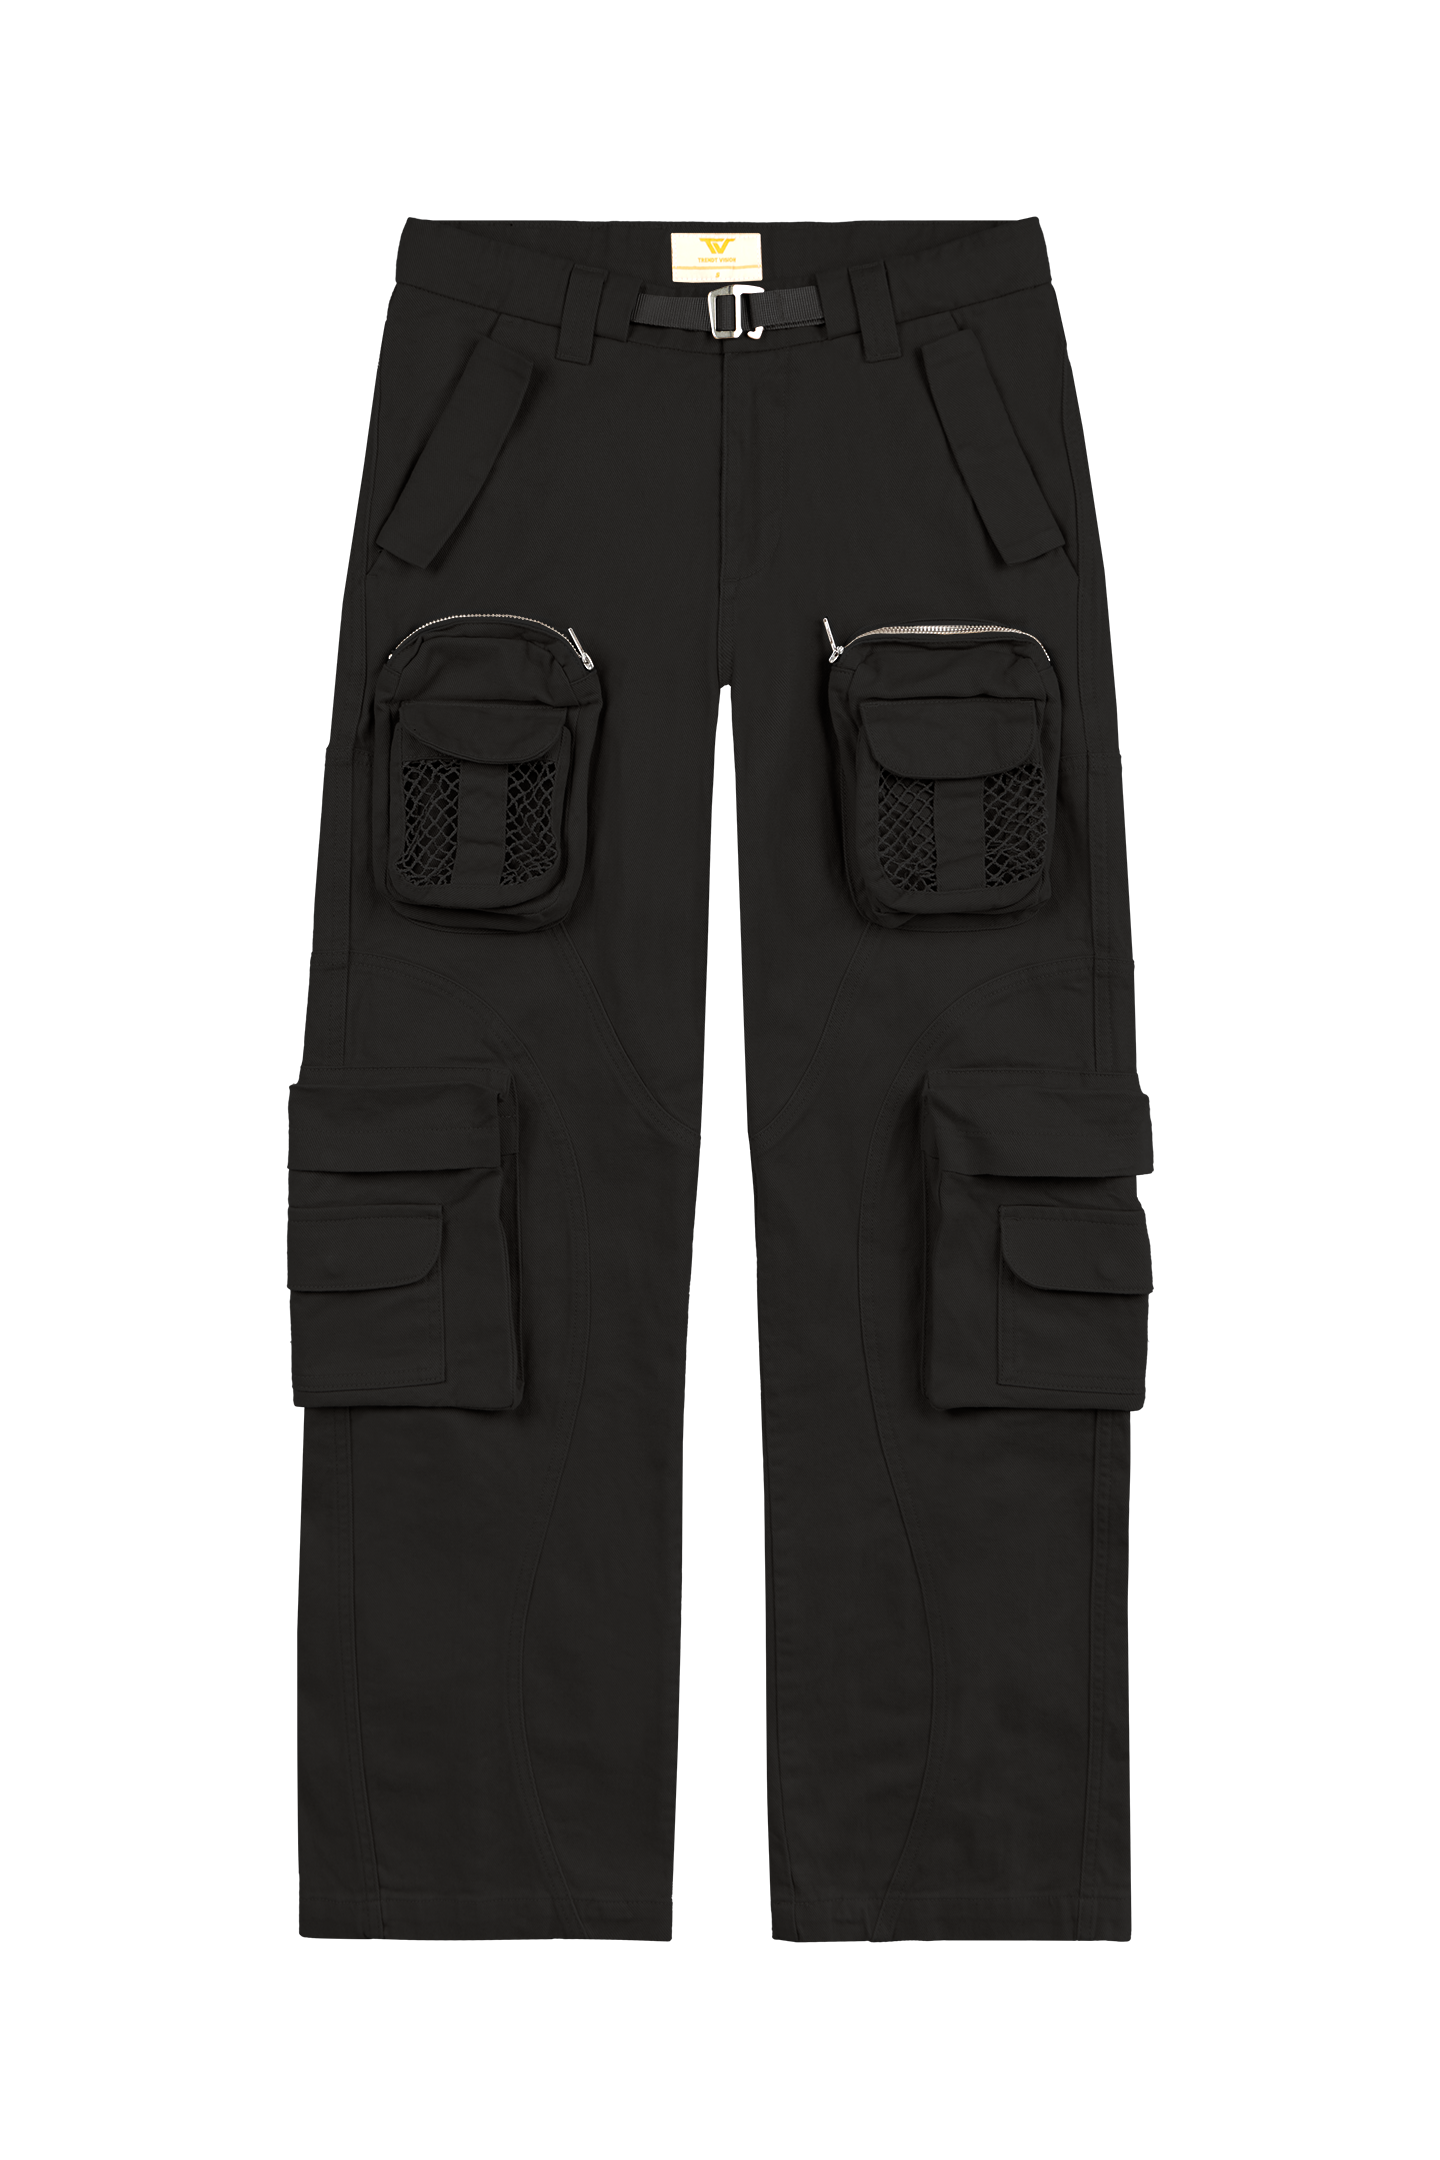 Black Net Cargo Pants 2.0